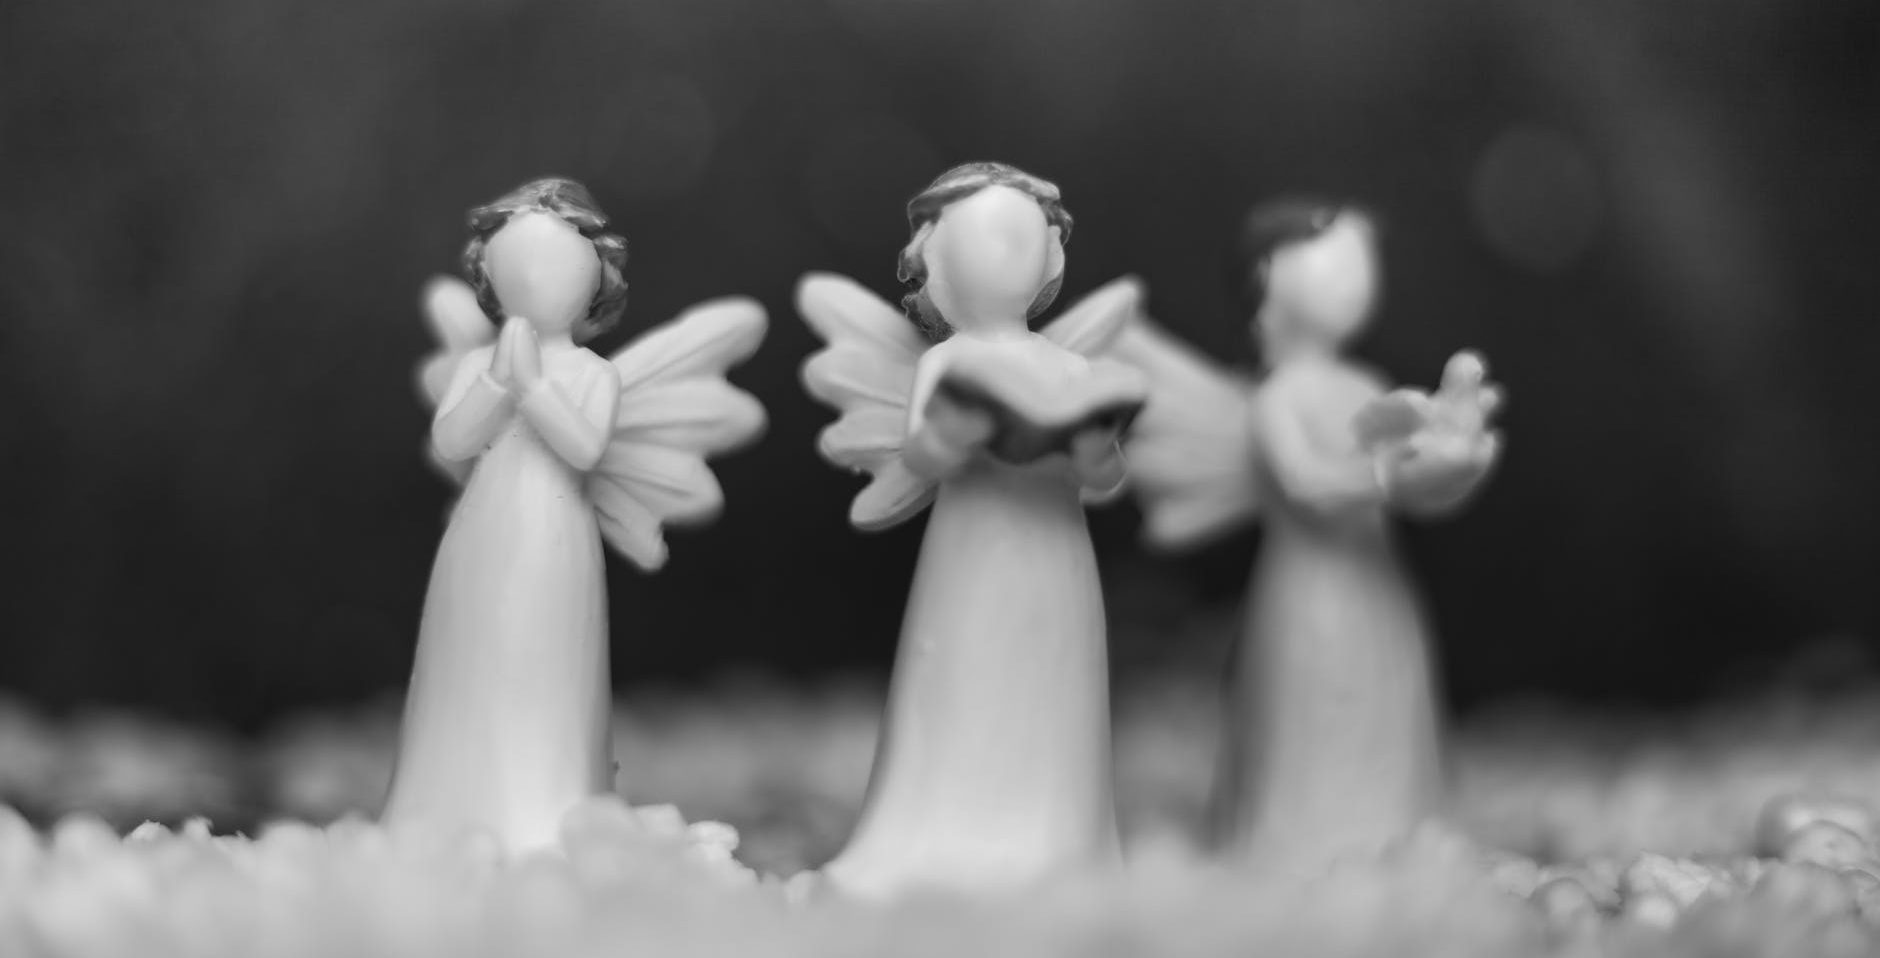 grayscale photo of angel figurines